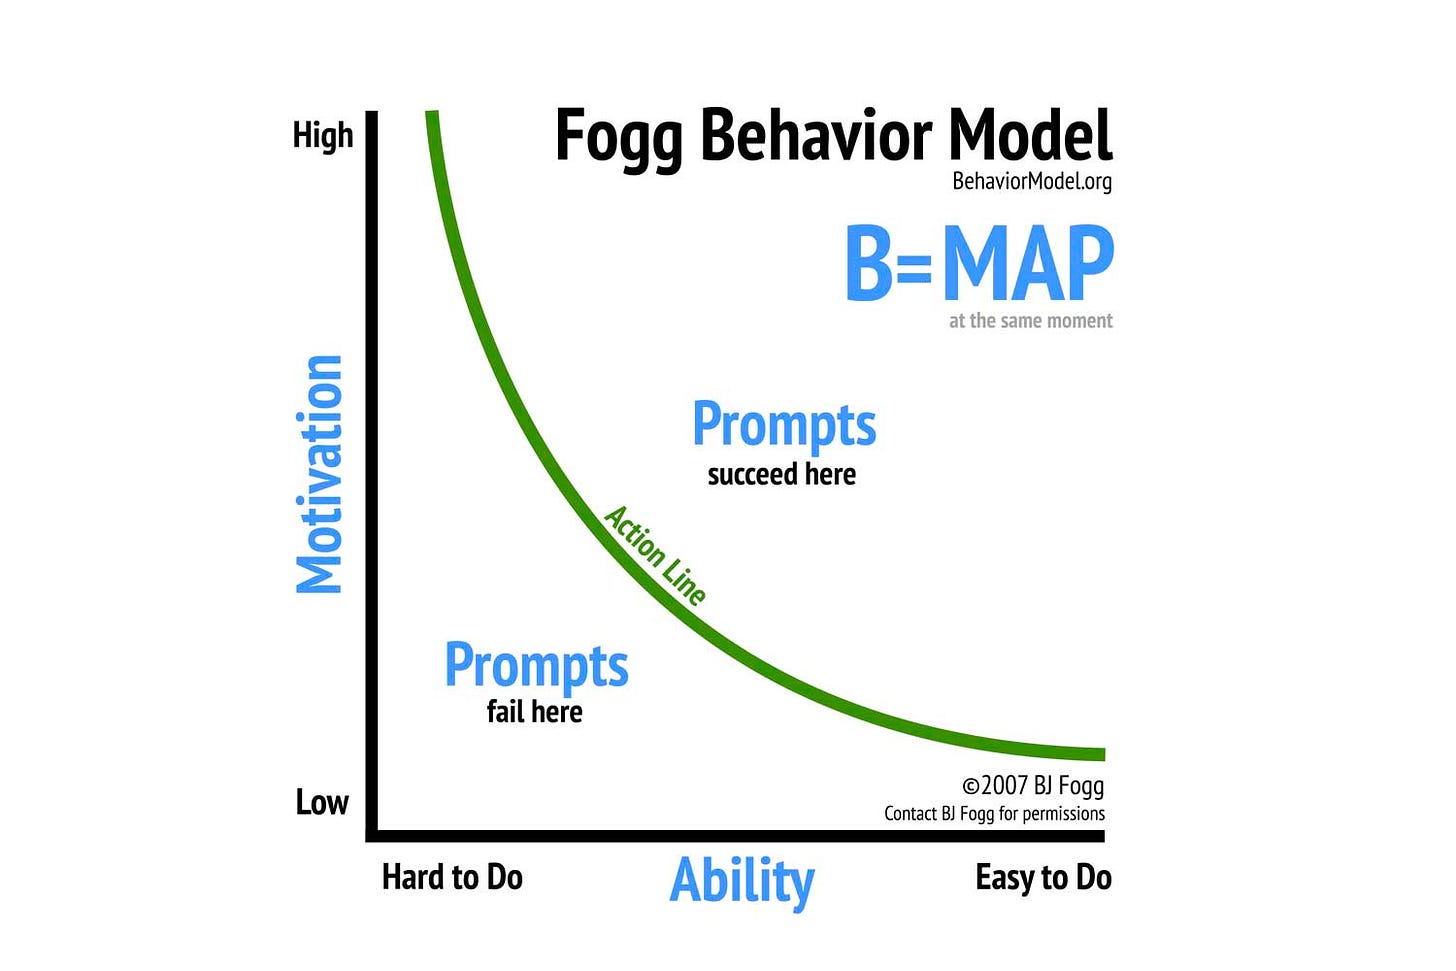 A screenshot of the Fogg Behaviour Model